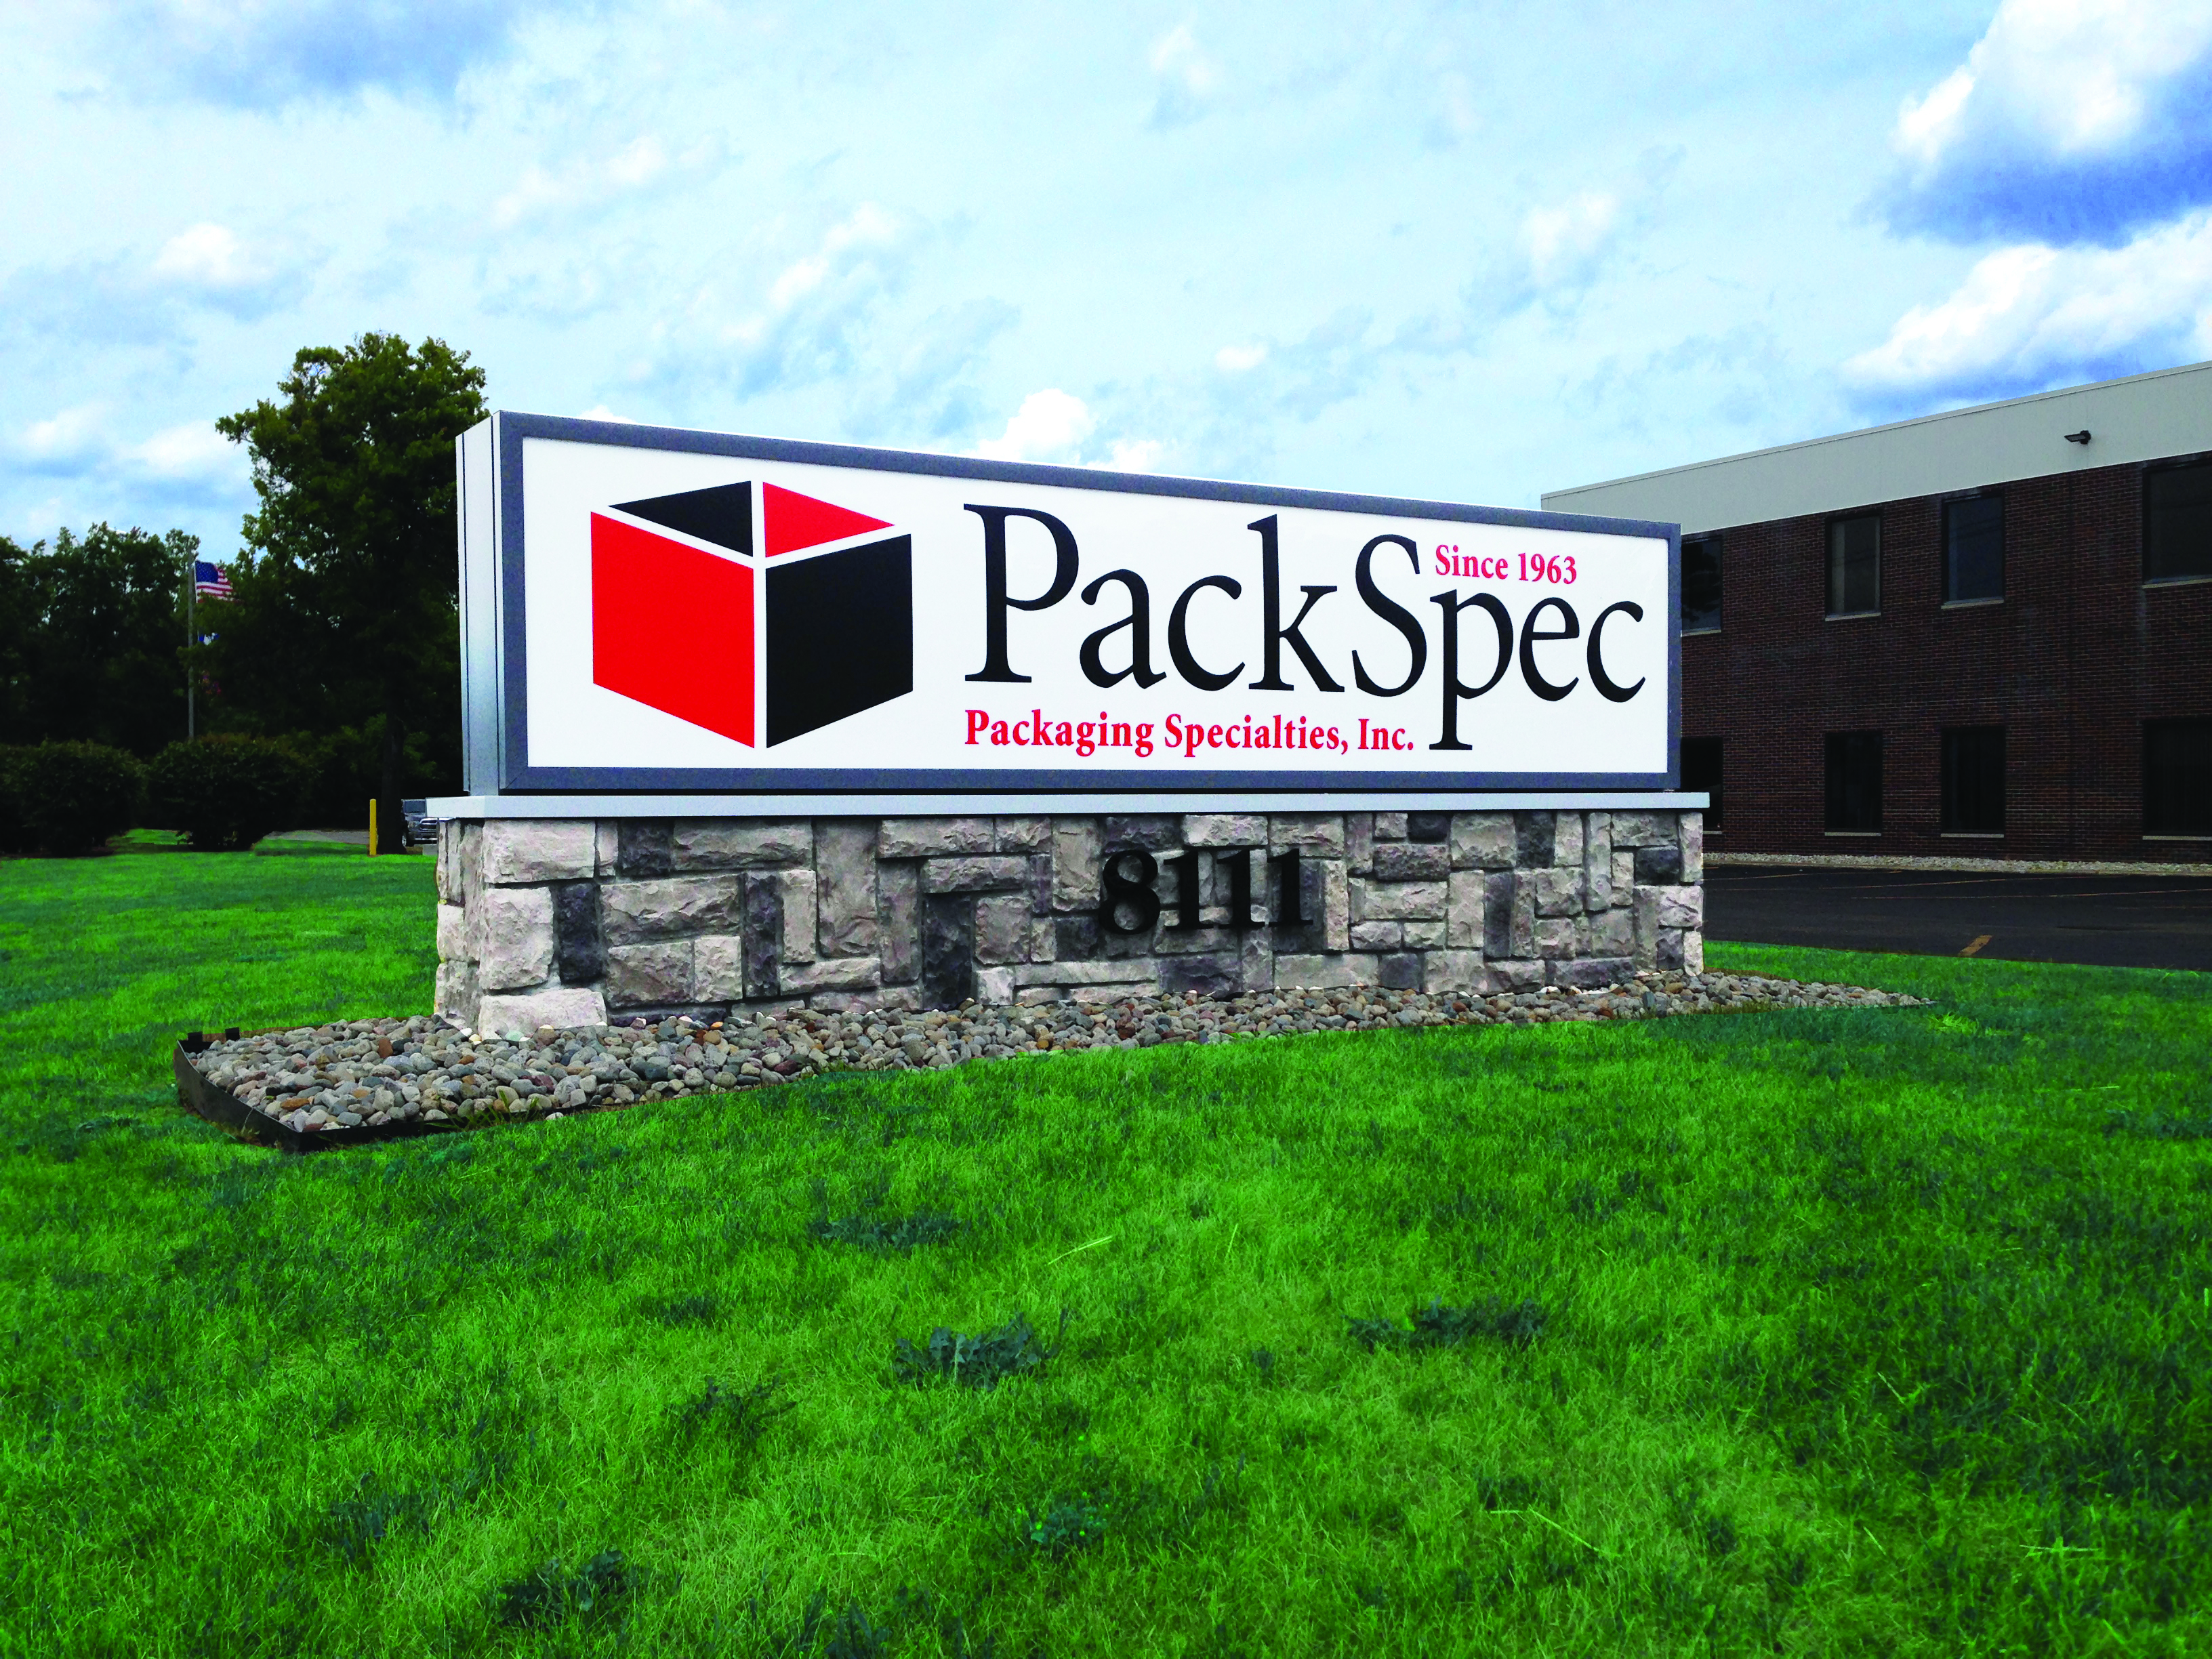 PackSpec New Location Signage